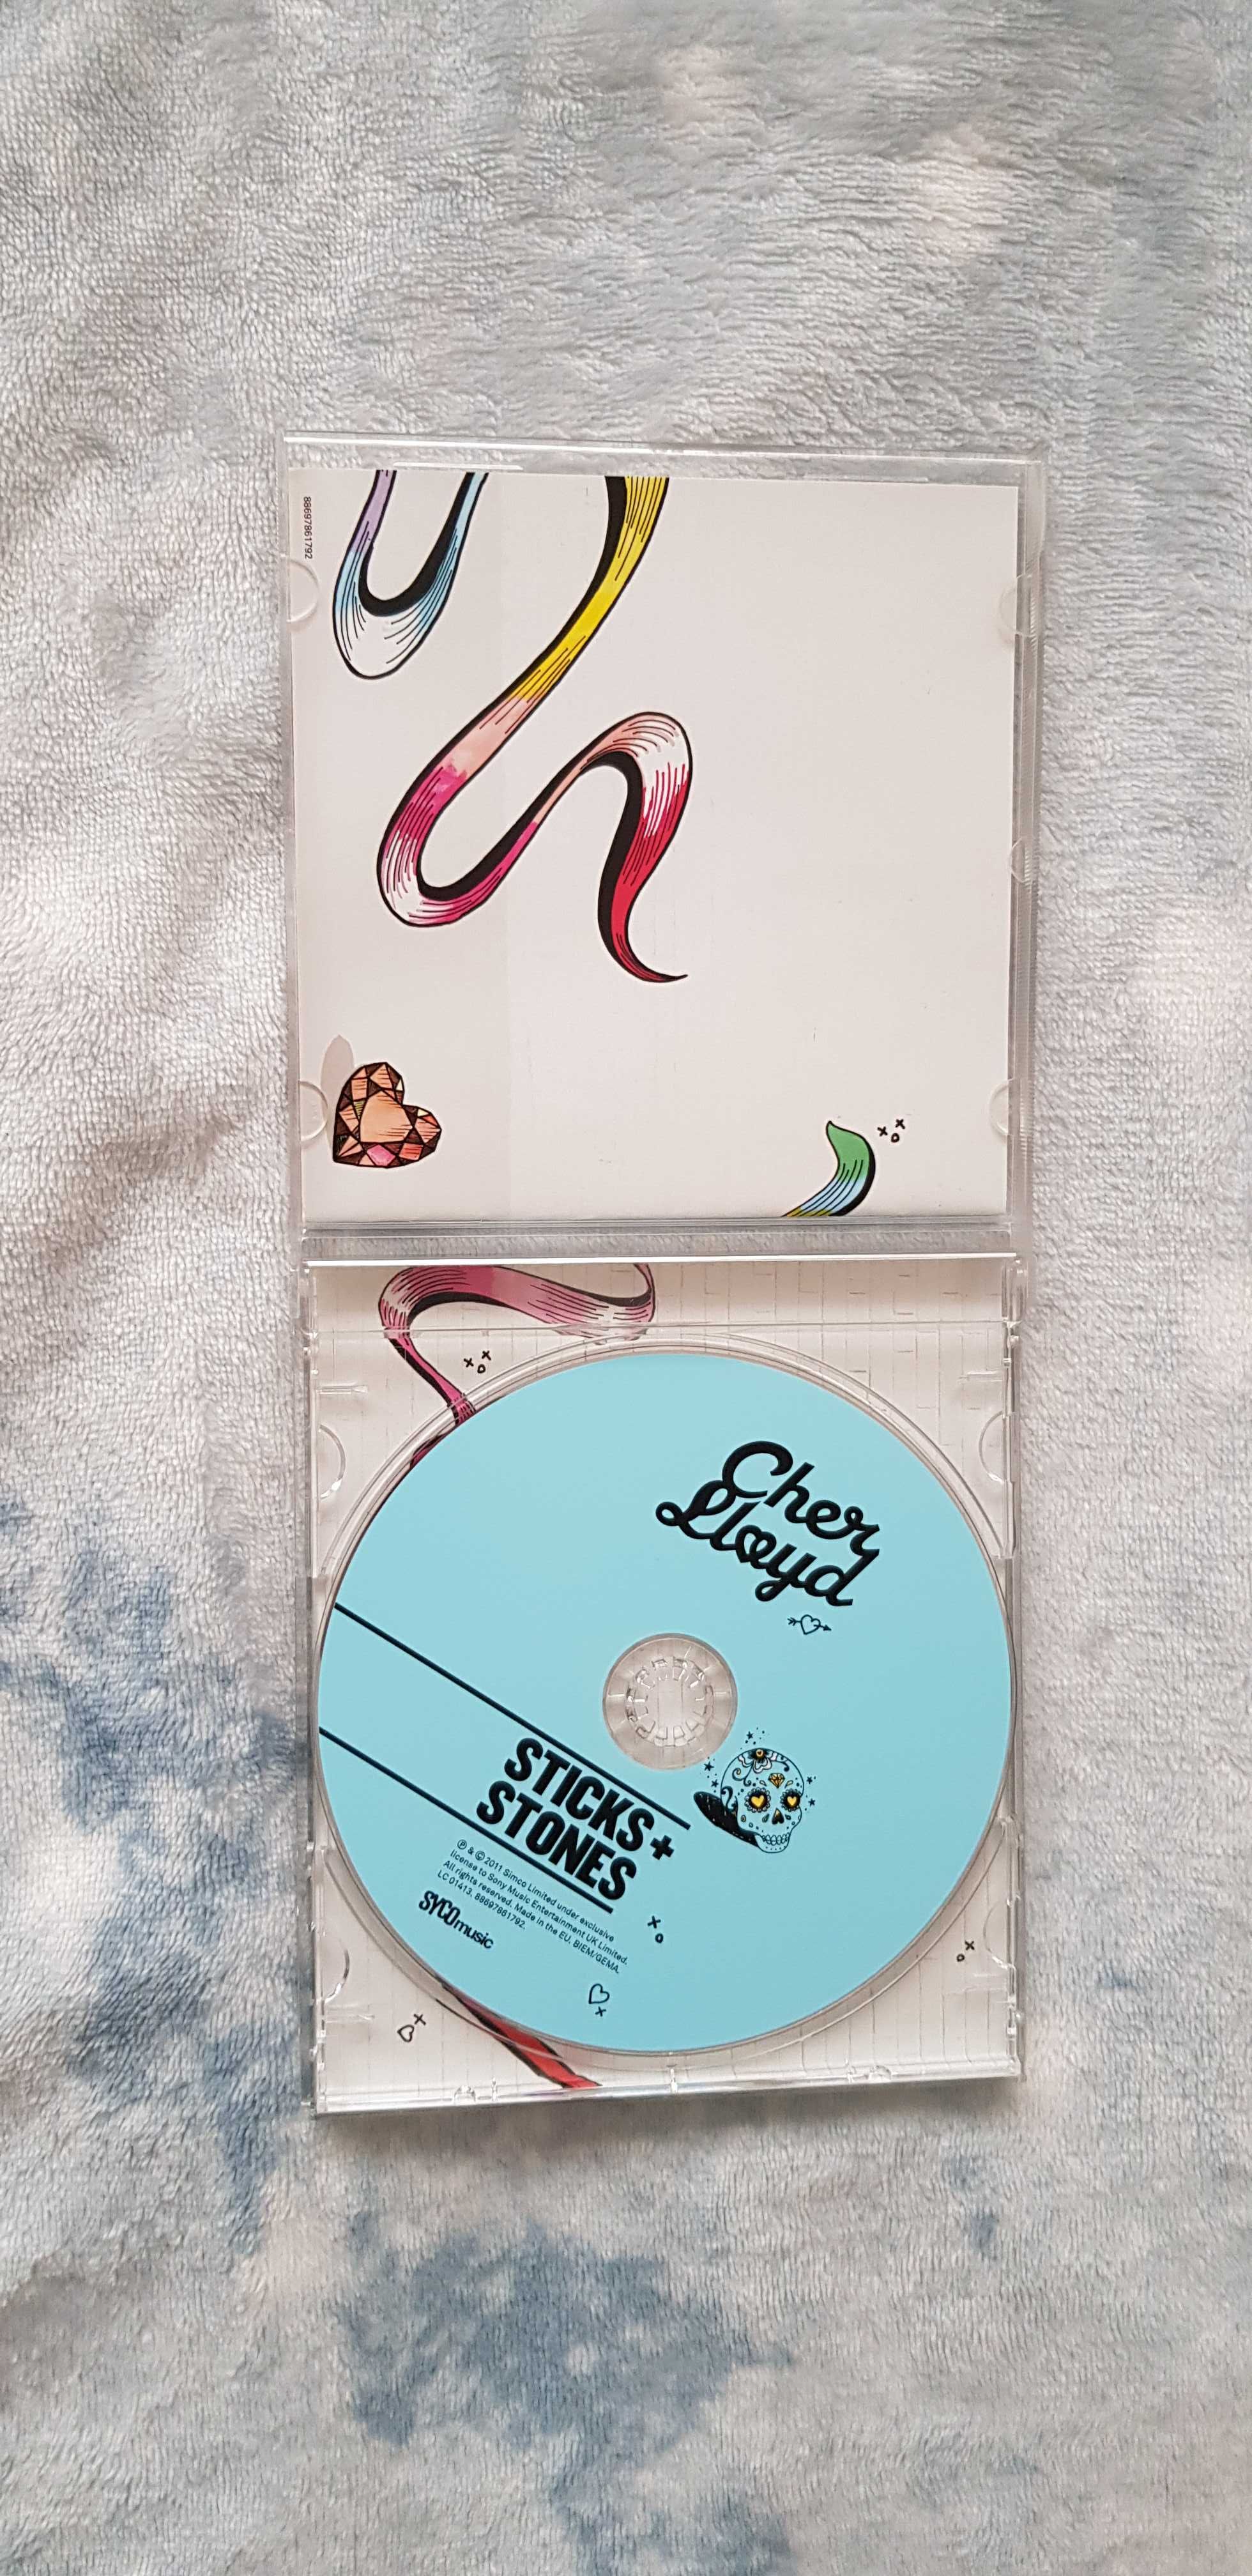 ALBUM CD "Sticks & Stones" - Cher Lloyd